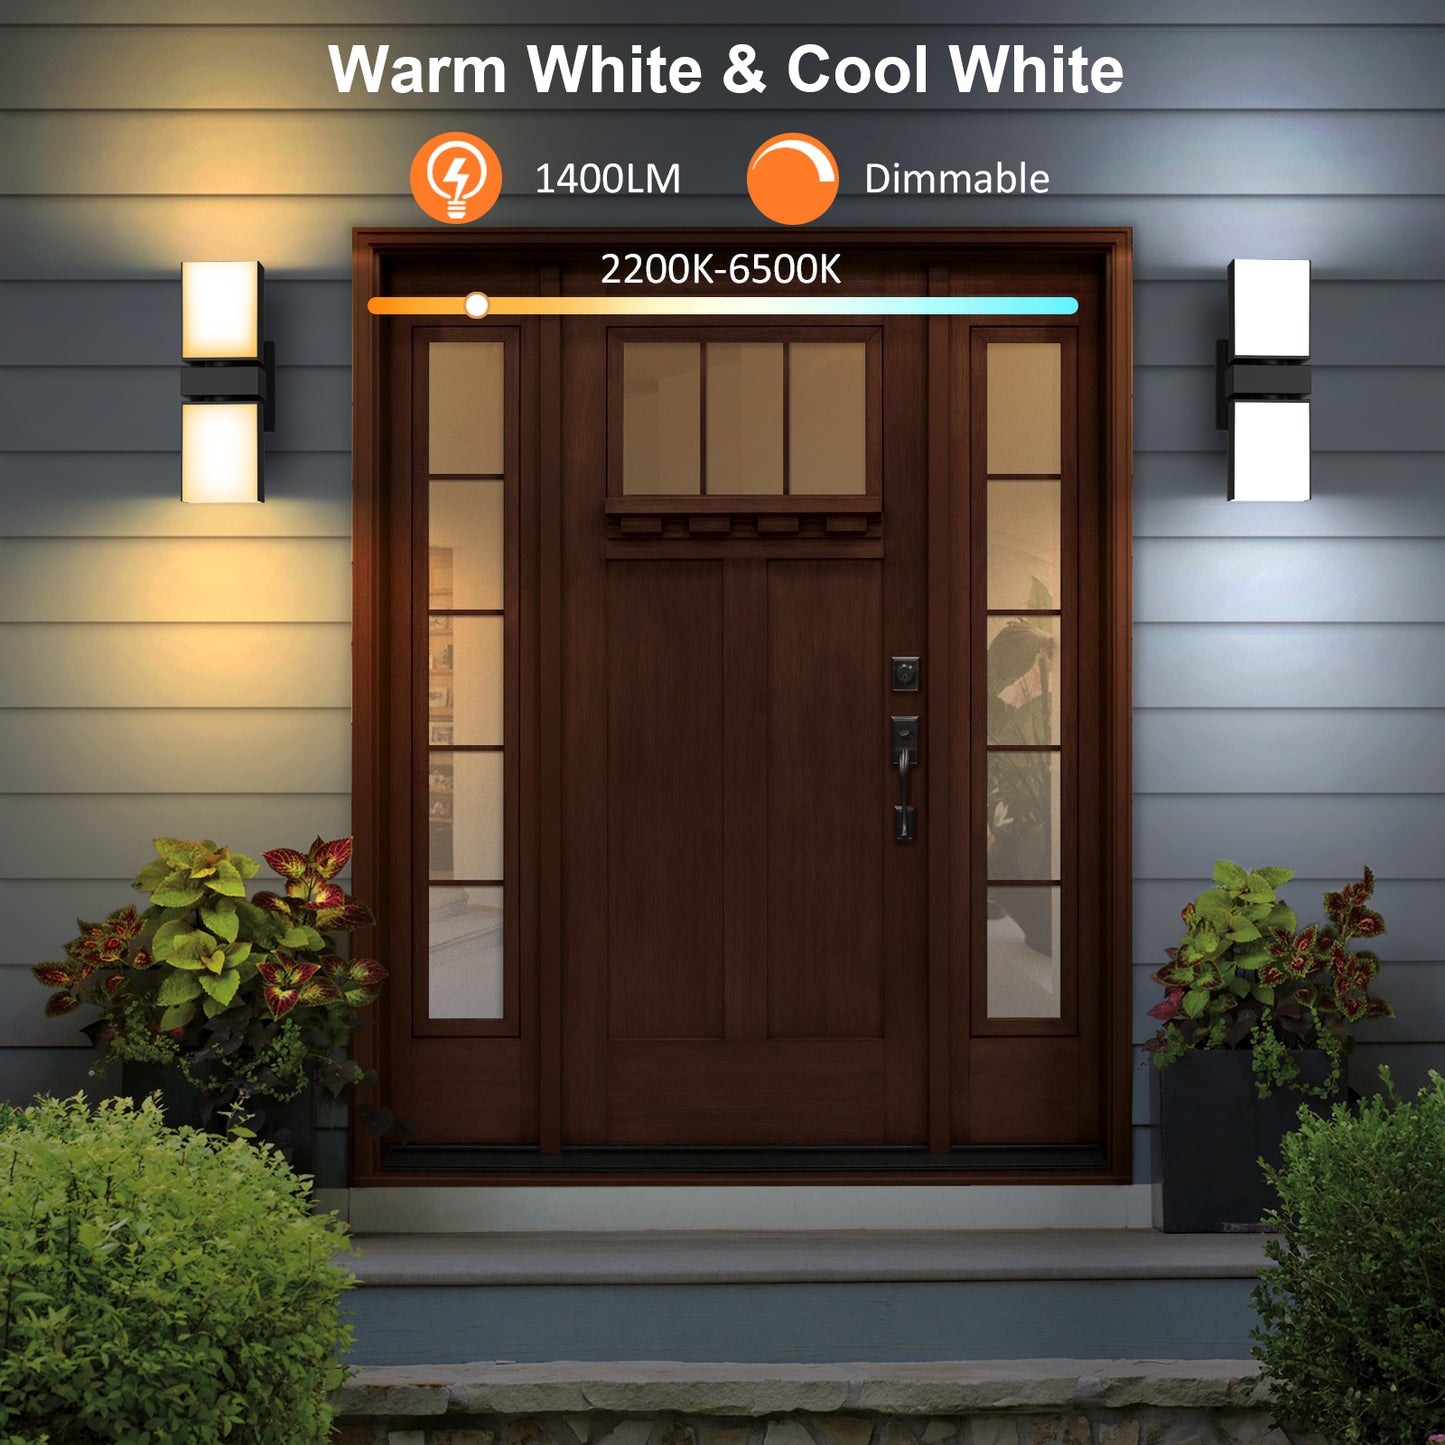 XMCOSY+ Smart Wall Lights RGB & Warm & Cool White